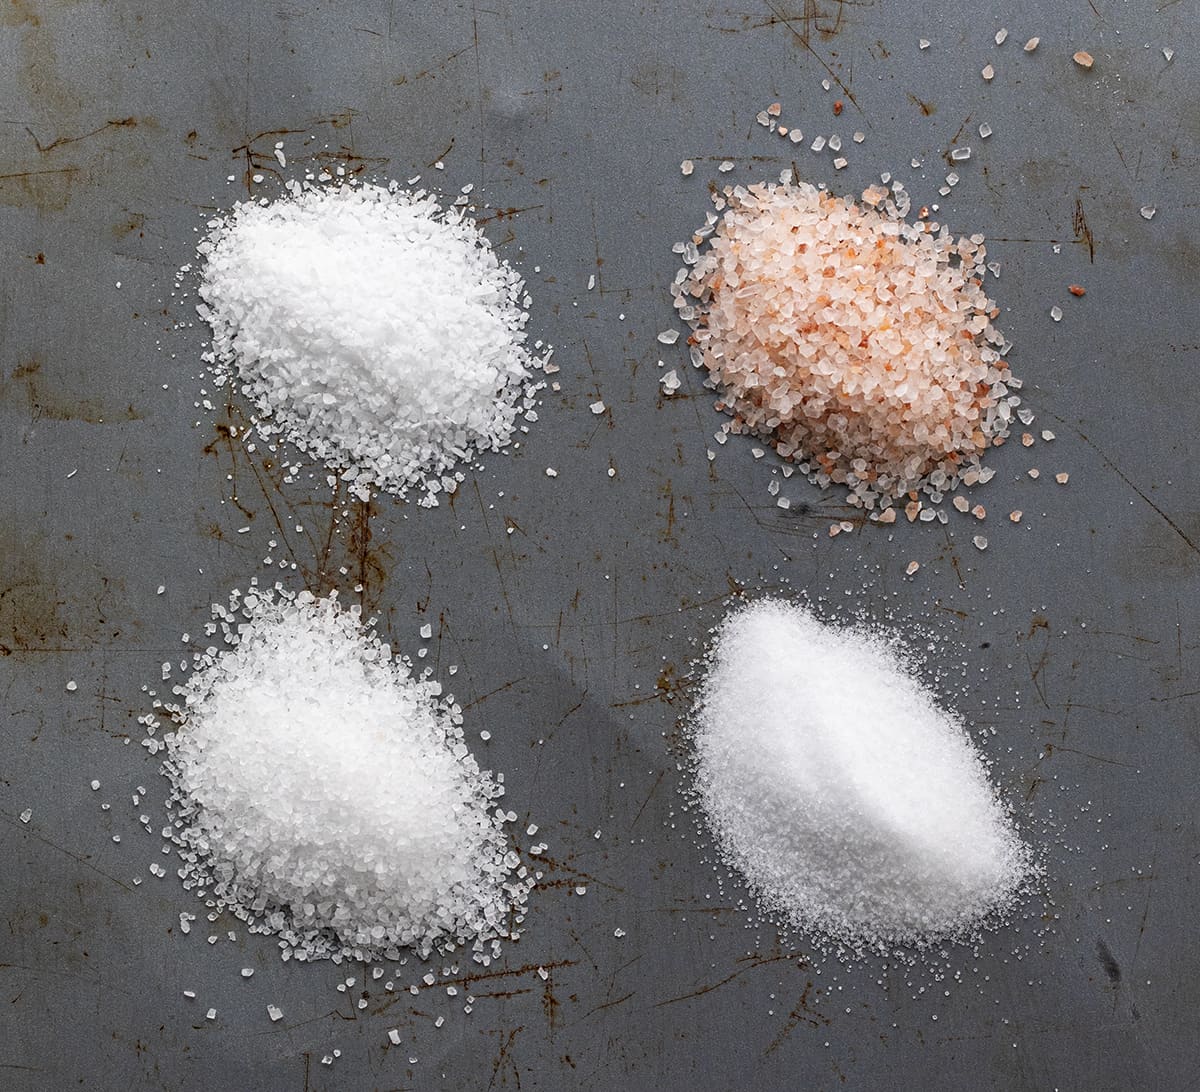 Showing Four Different Salts, Table Salt, Sea Salt, Kosher Salt, and Himalayan Salt.